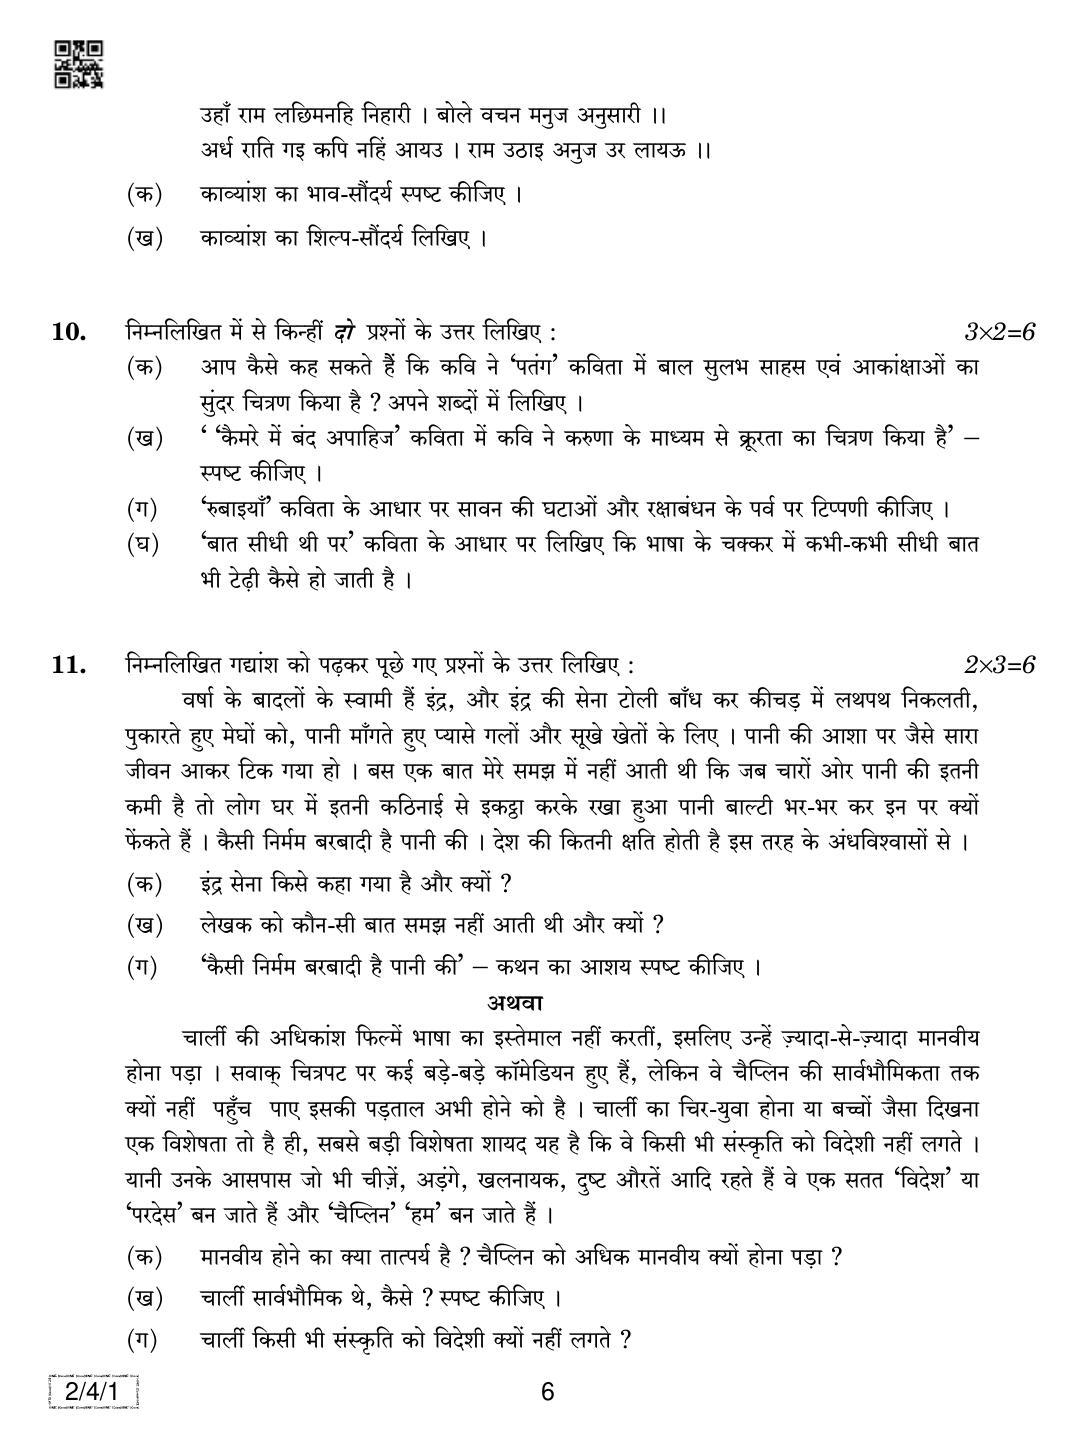 CBSE Class 12 2-4-1 Hindi Core 2019 Question Paper - Page 6